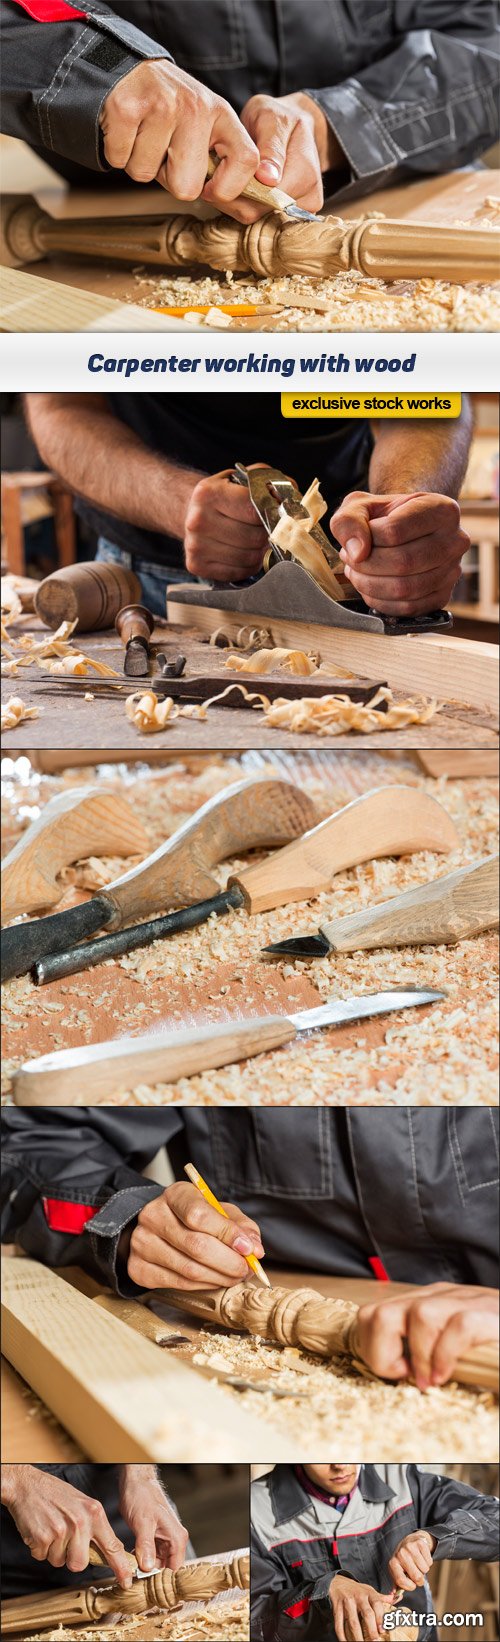 Carpenter working with wood 6x JPEG